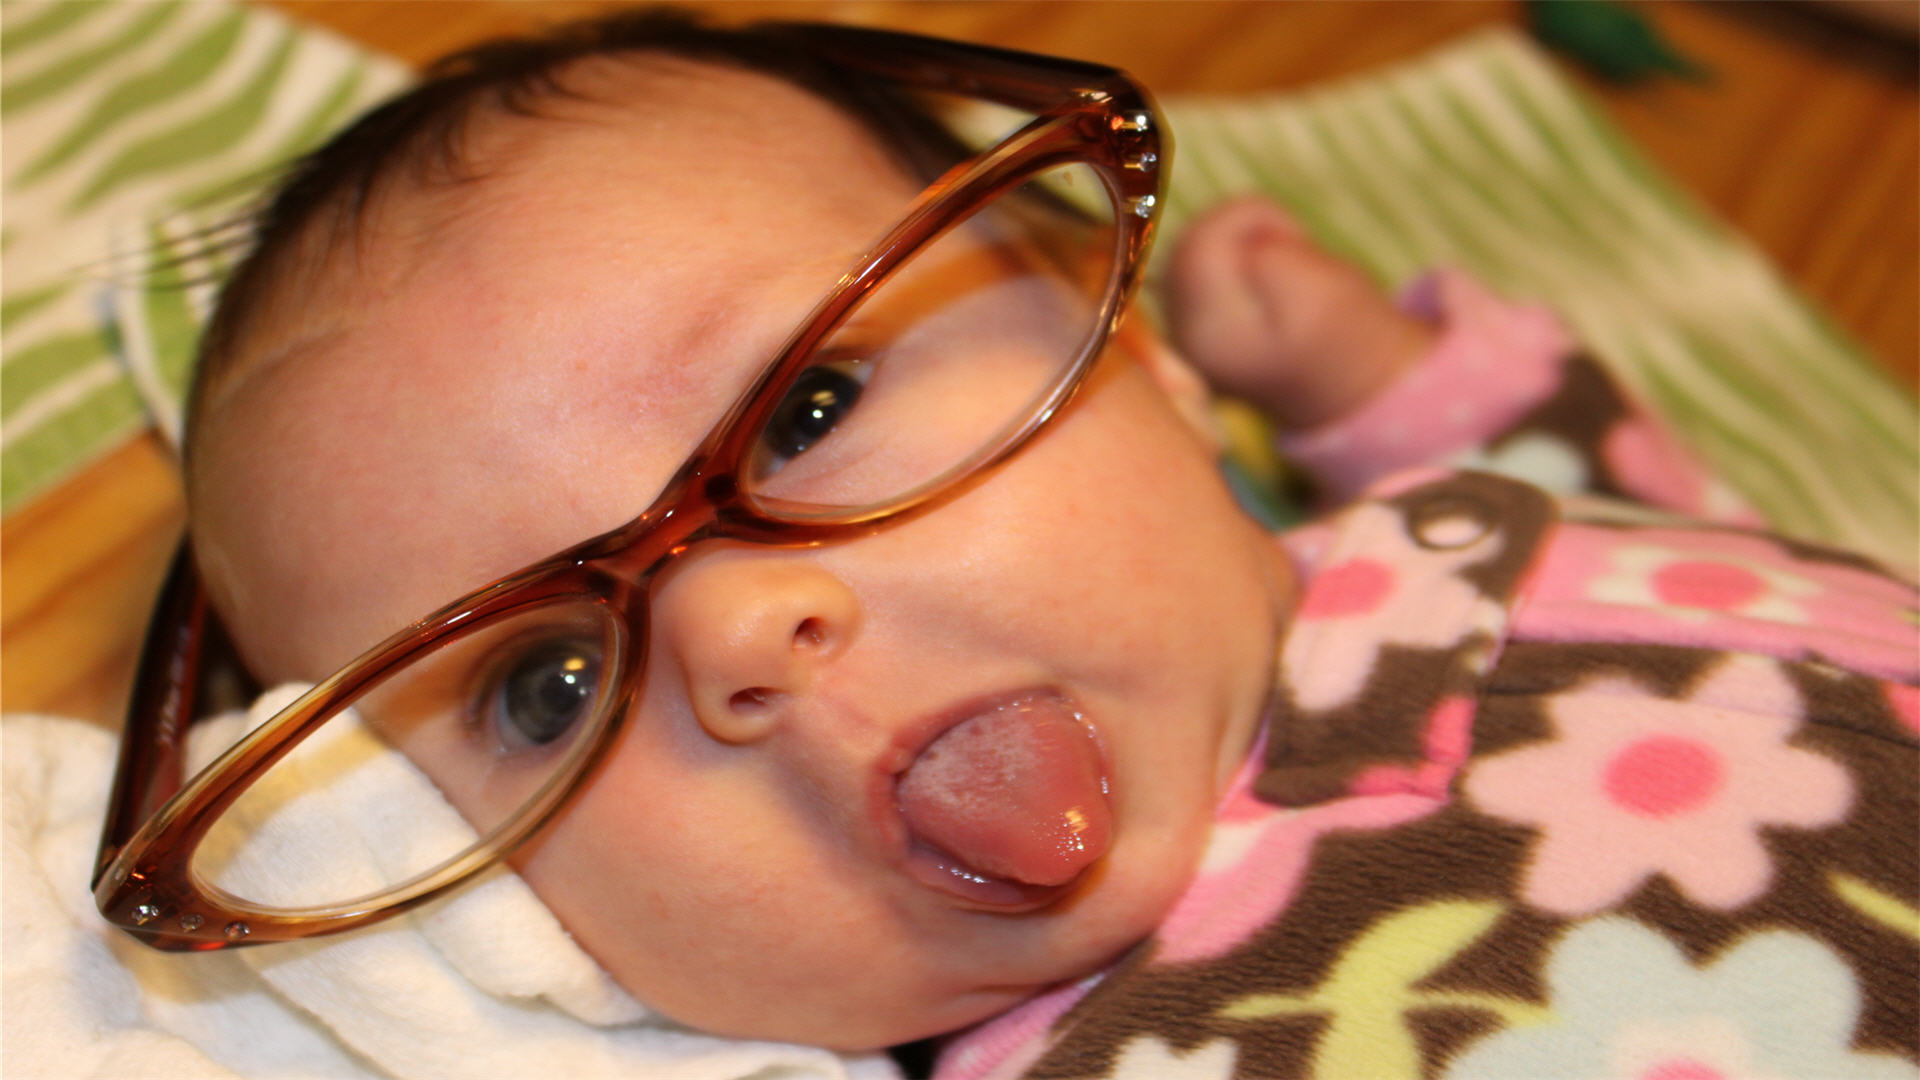 Funny-Baby-Girl-With-Large-Eyesglasse.jpg